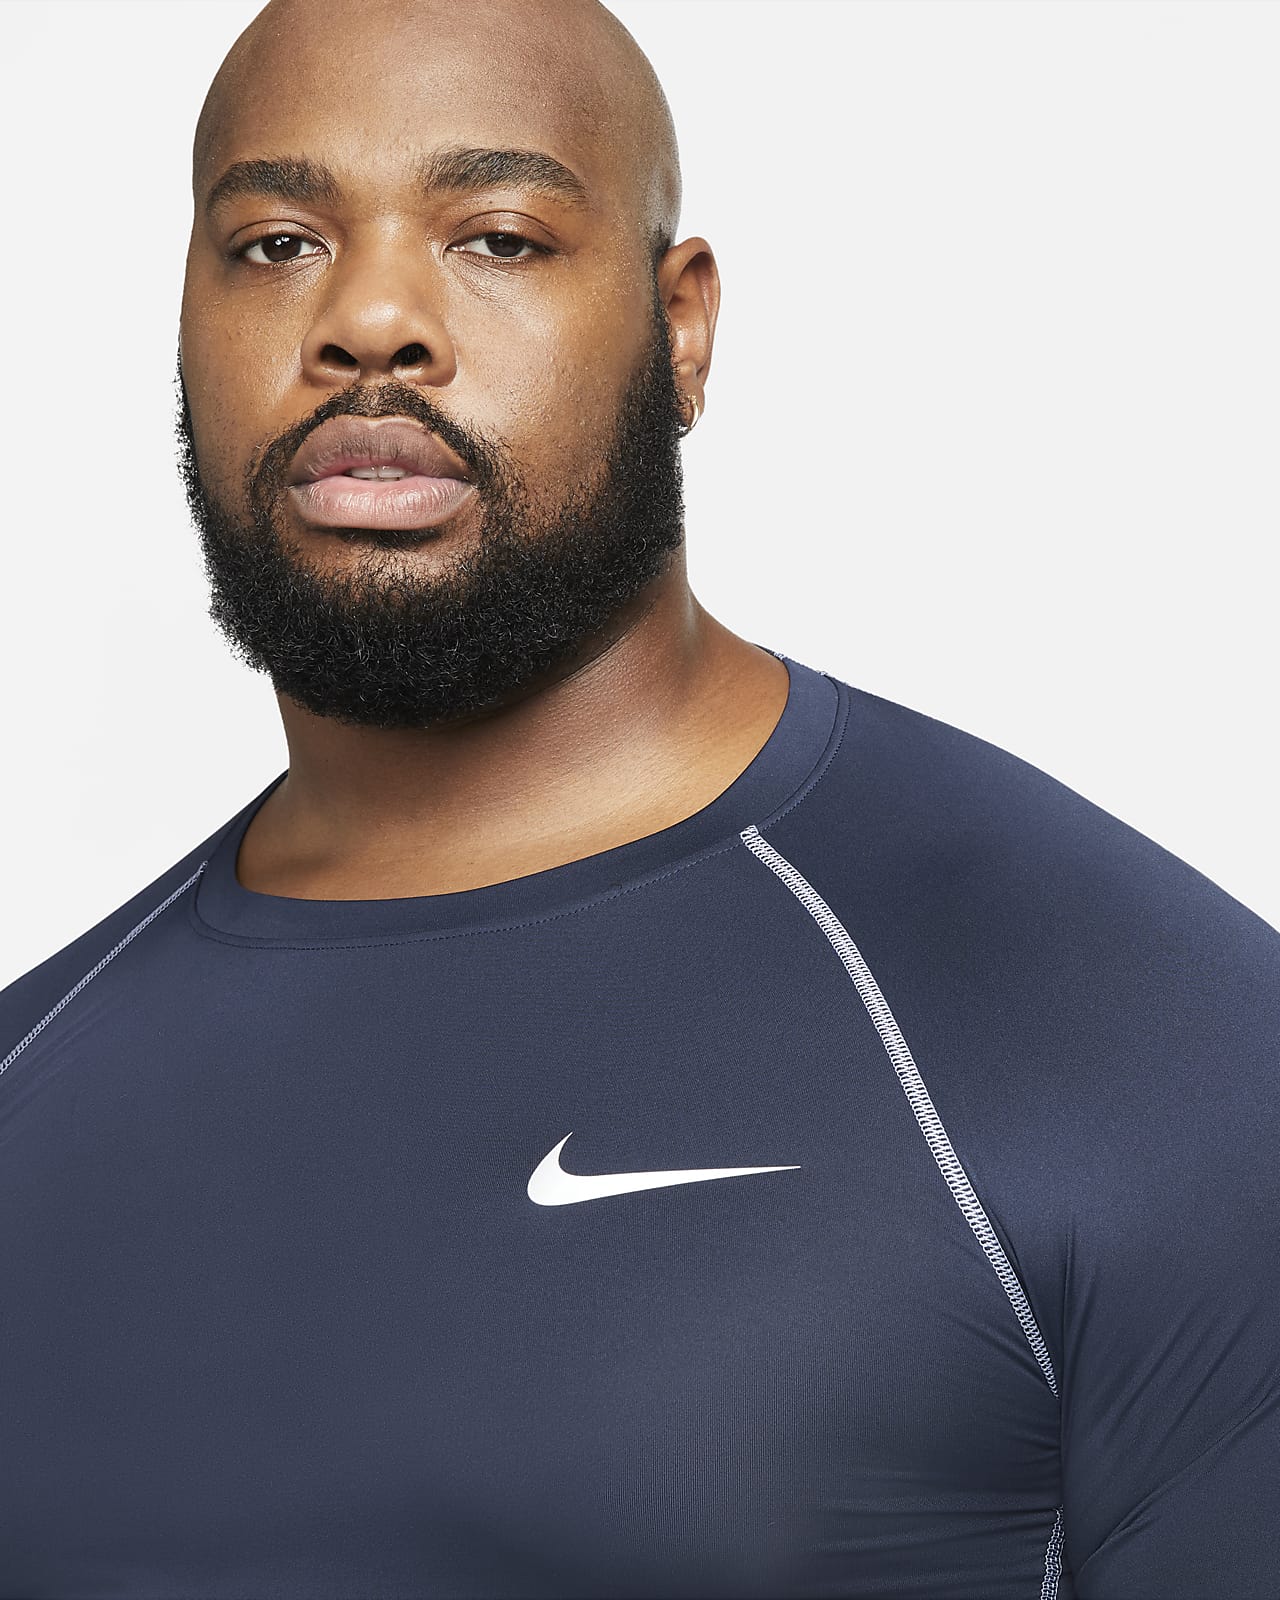 Nike Pro Men's Dri-FIT Tight Long-Sleeve Fitness Top